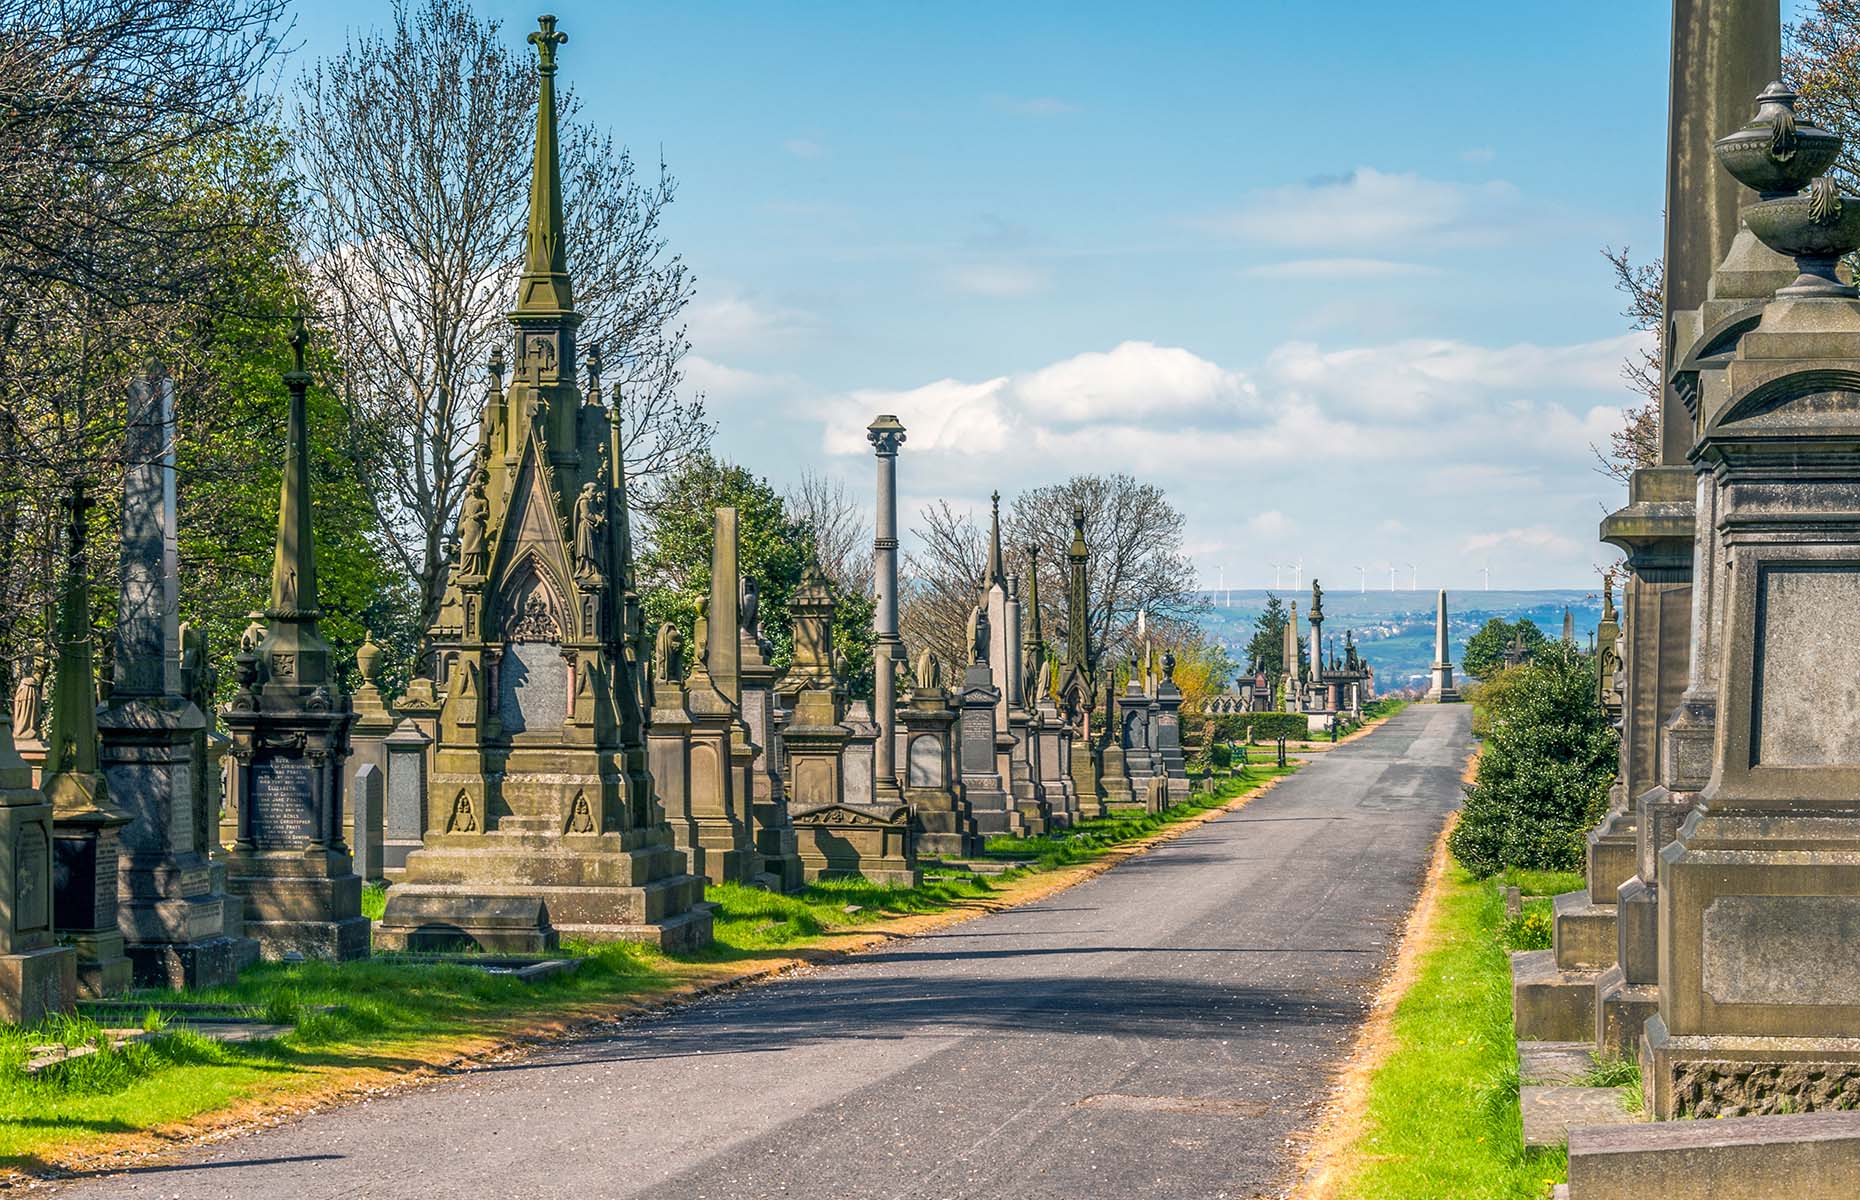 Undercliffe Cemetery in Bradford (Image: peter jeffreys/Shutterstock)